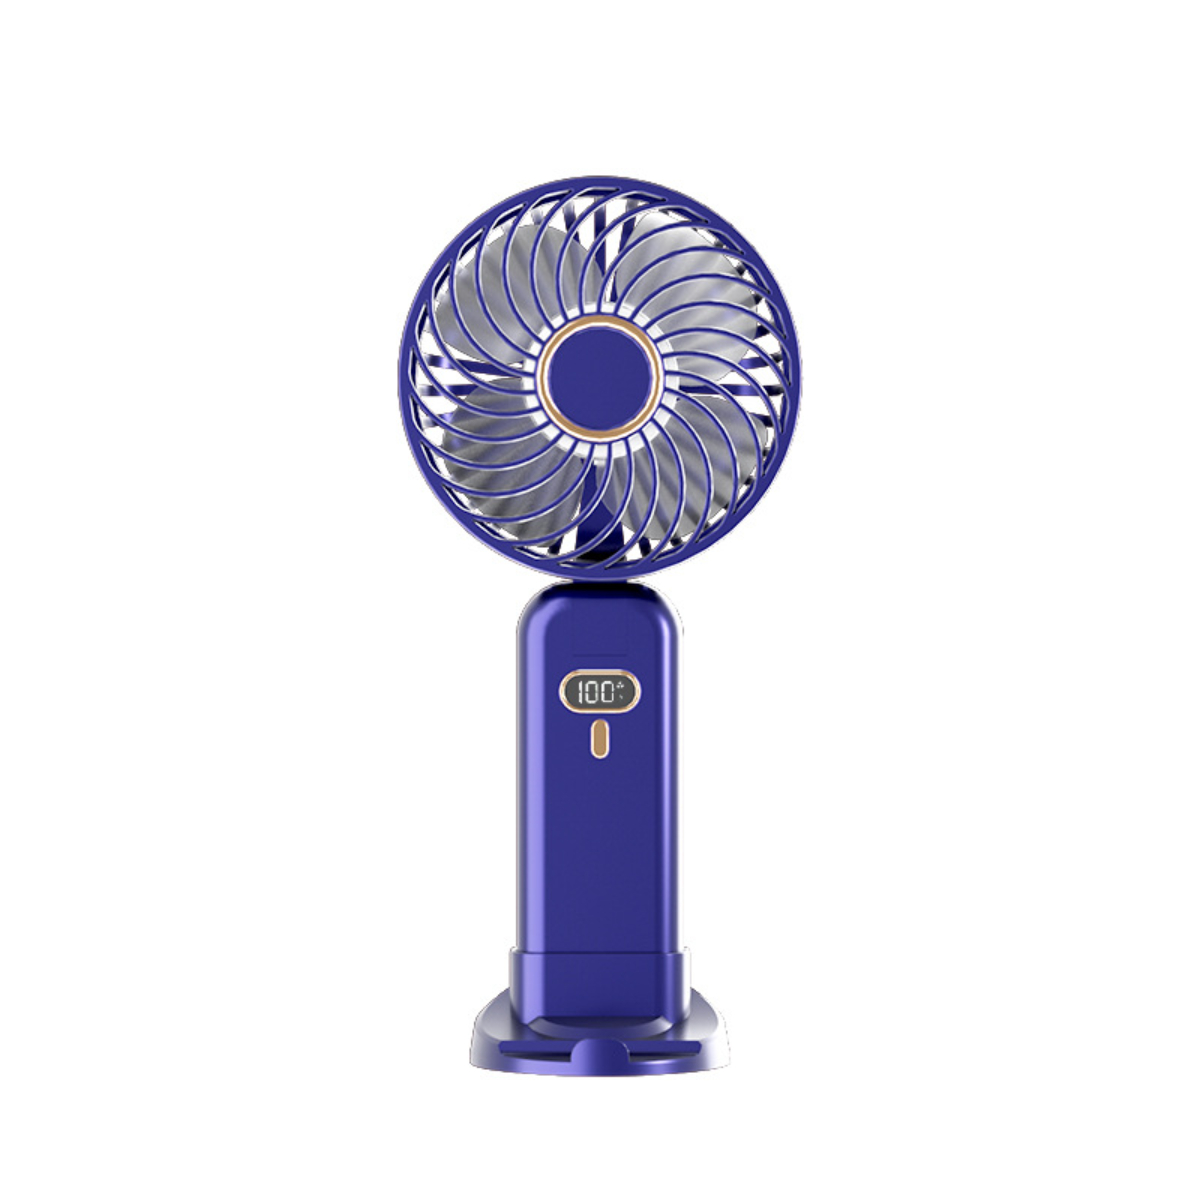 Fan Digital SYNTEK Handheld Kleiner Mist Fan Ventilator Folding Small Cooling Kompaktventilator Weiß